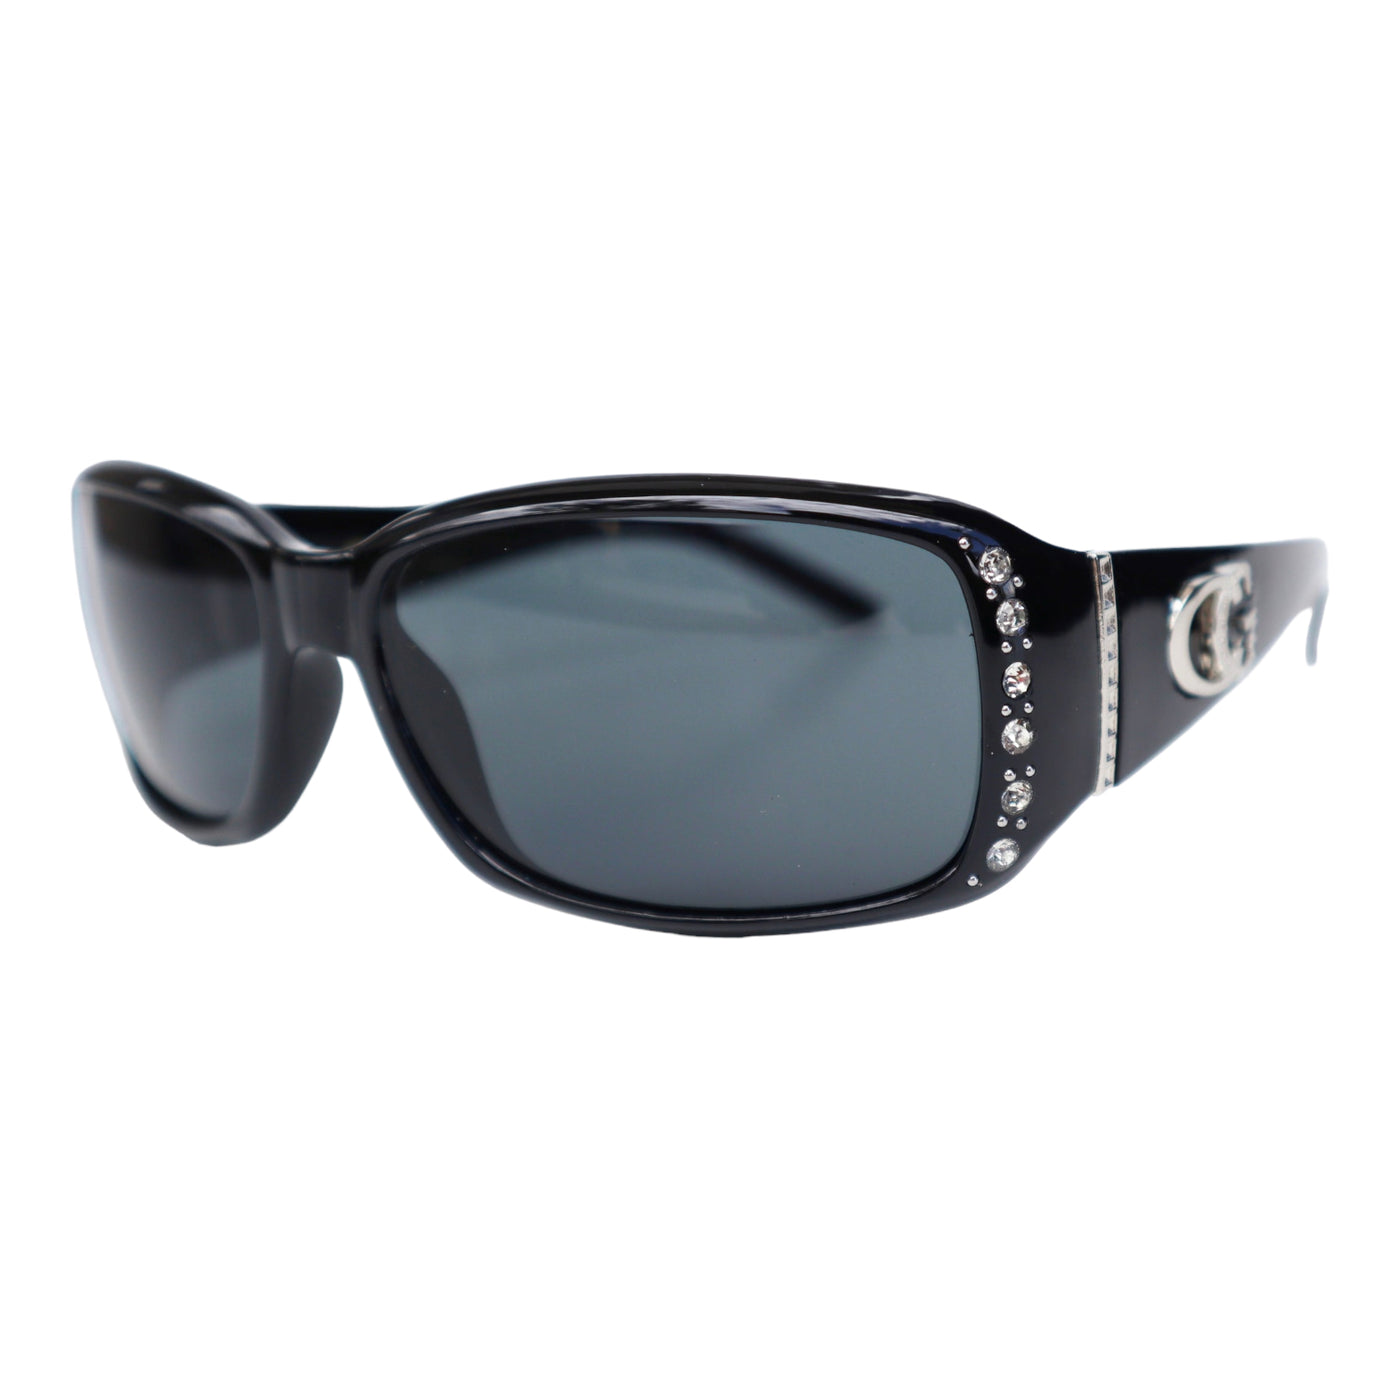 VG Women's Rhinestone Sunglasses Black Frame with Black Lens